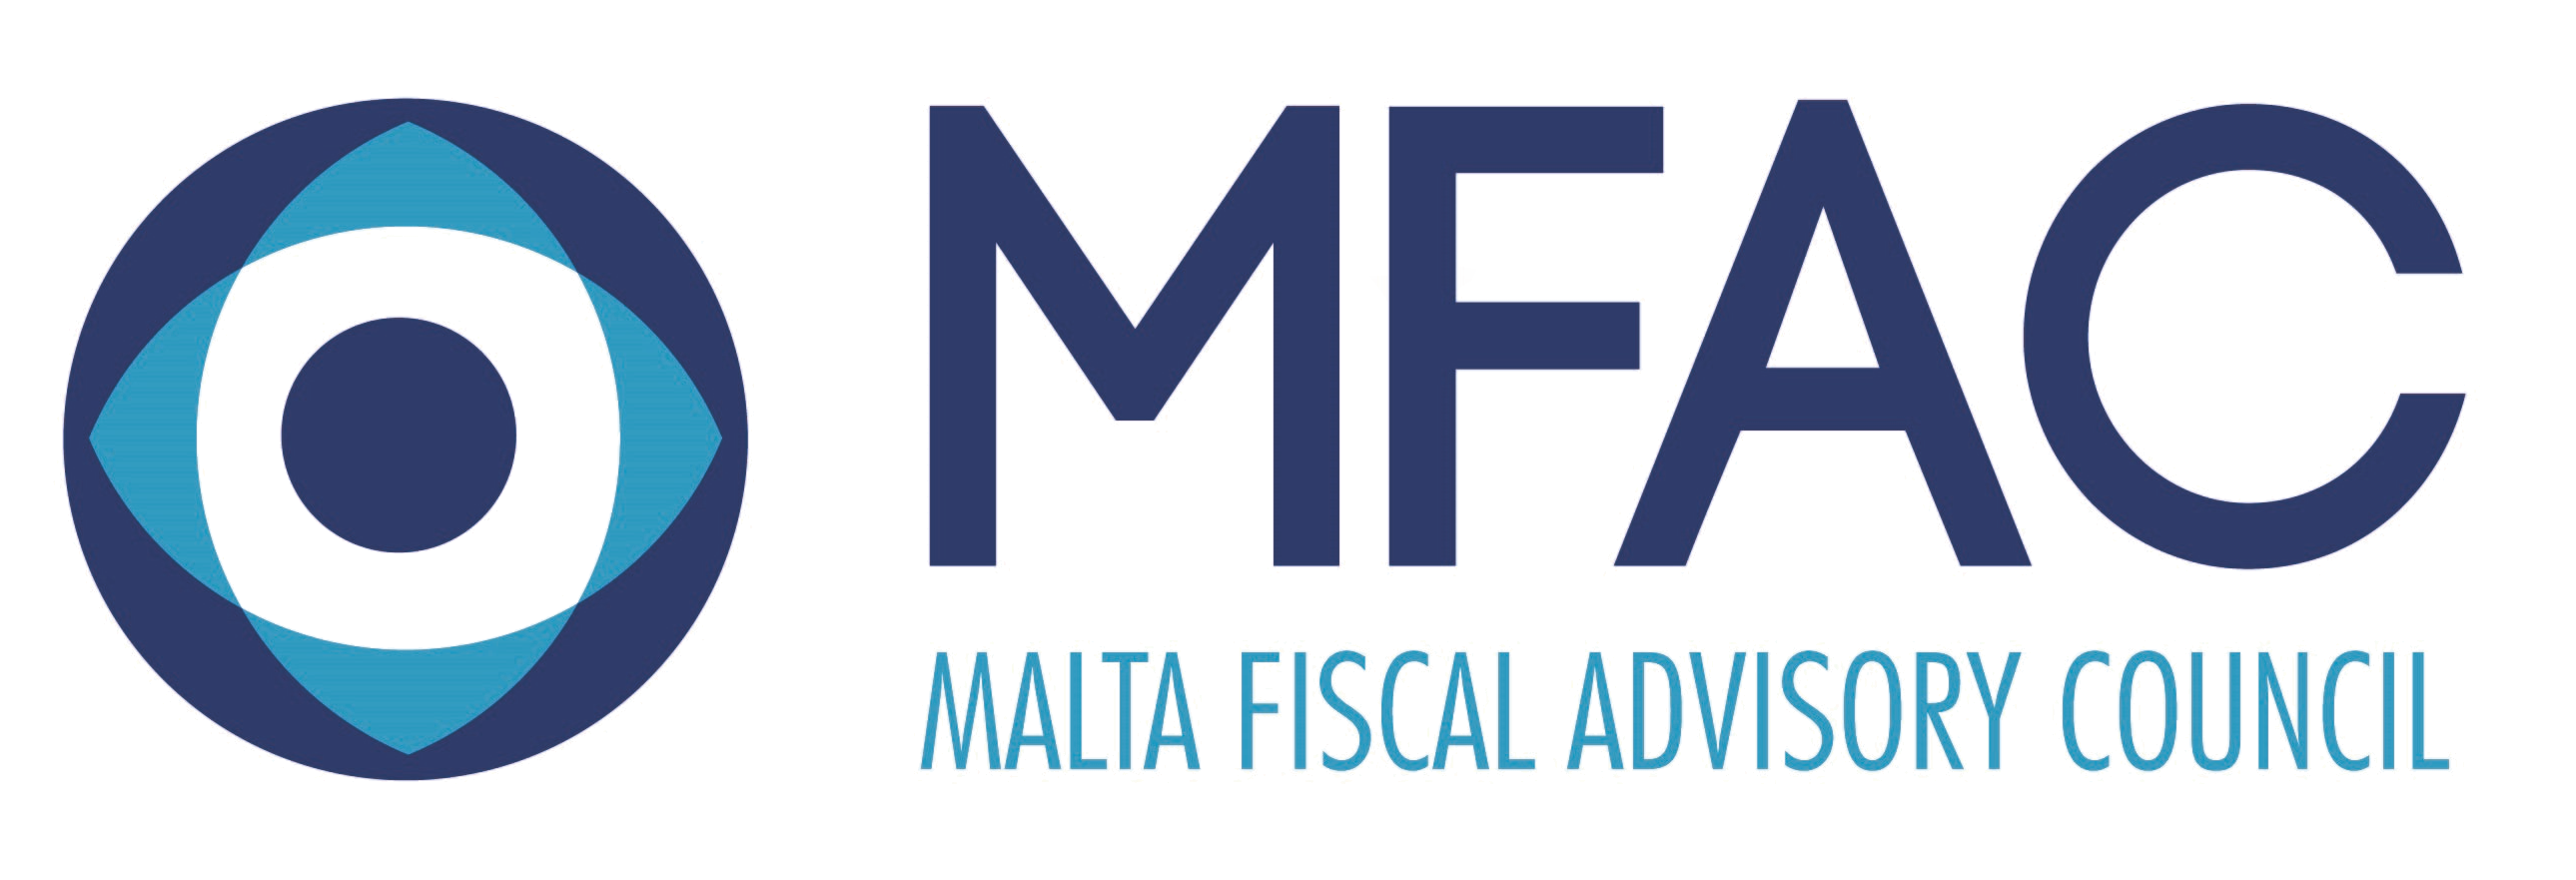 Malta Fiscal Advisory Council (MFAC)